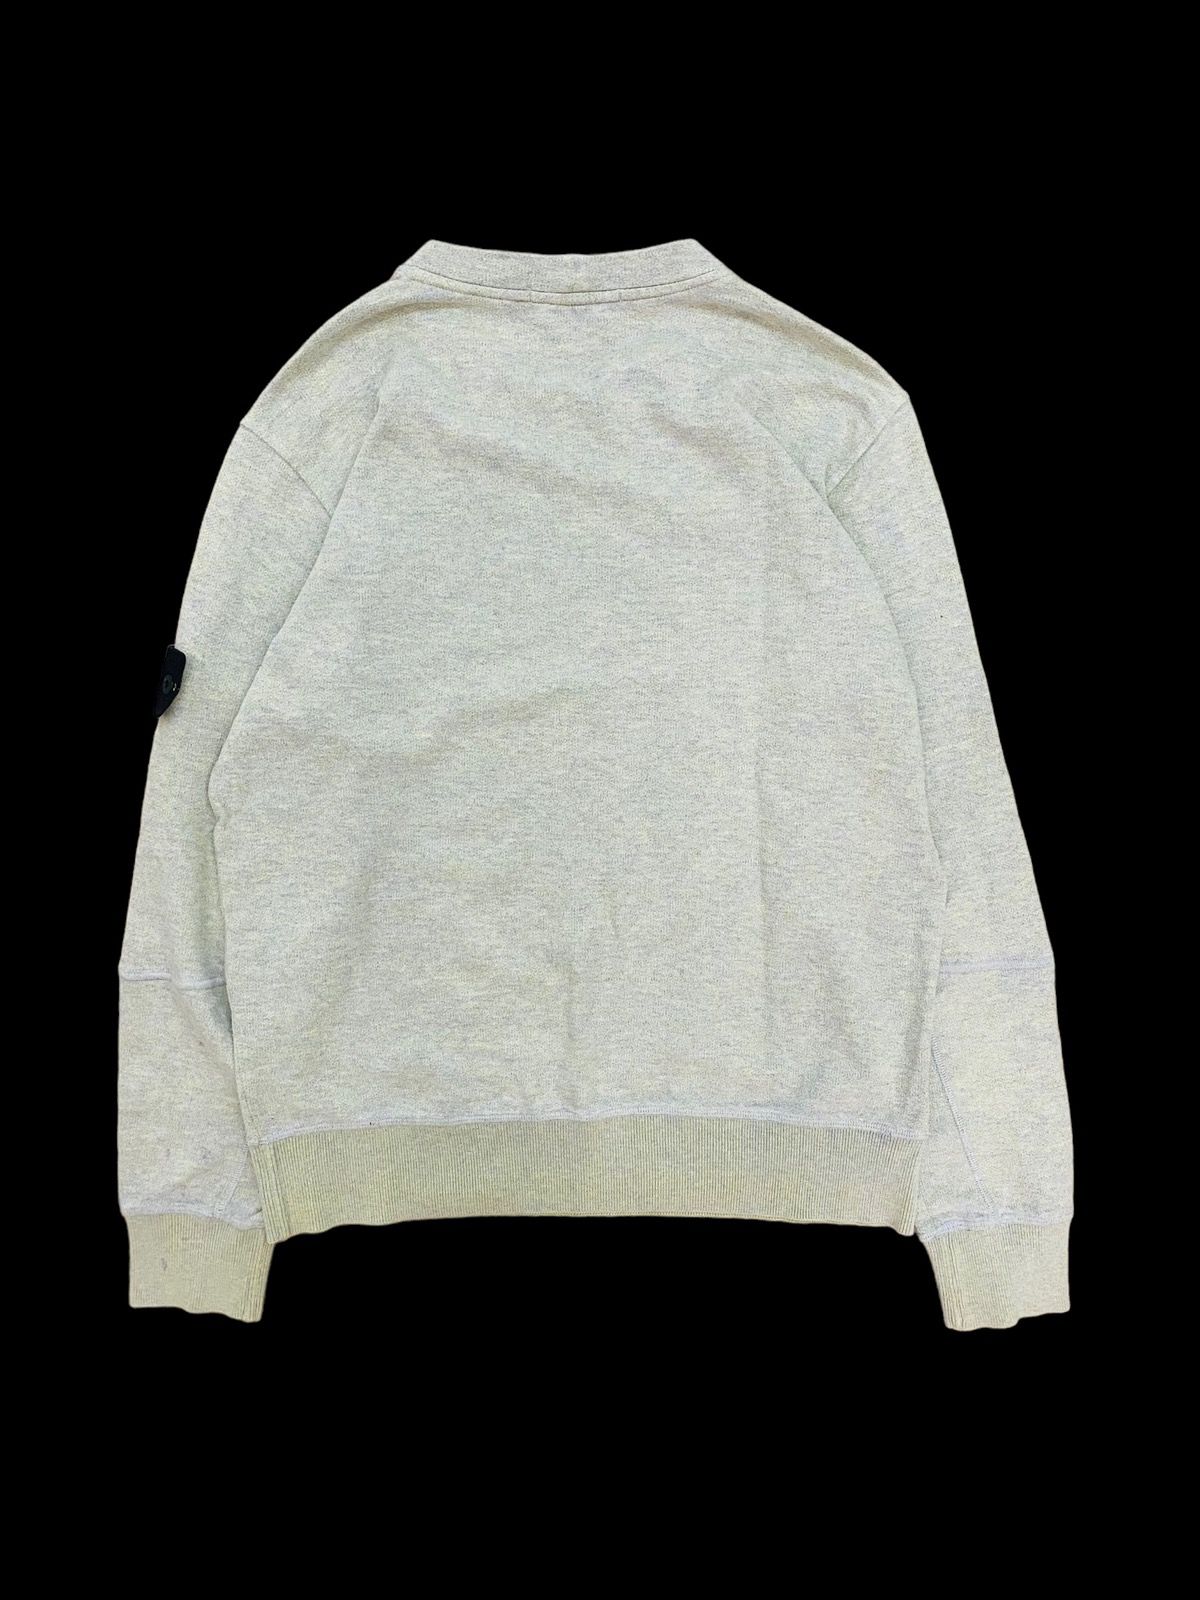 Stone Island Sweatshirt Pullover Vintage Authentic Men’s L - 8